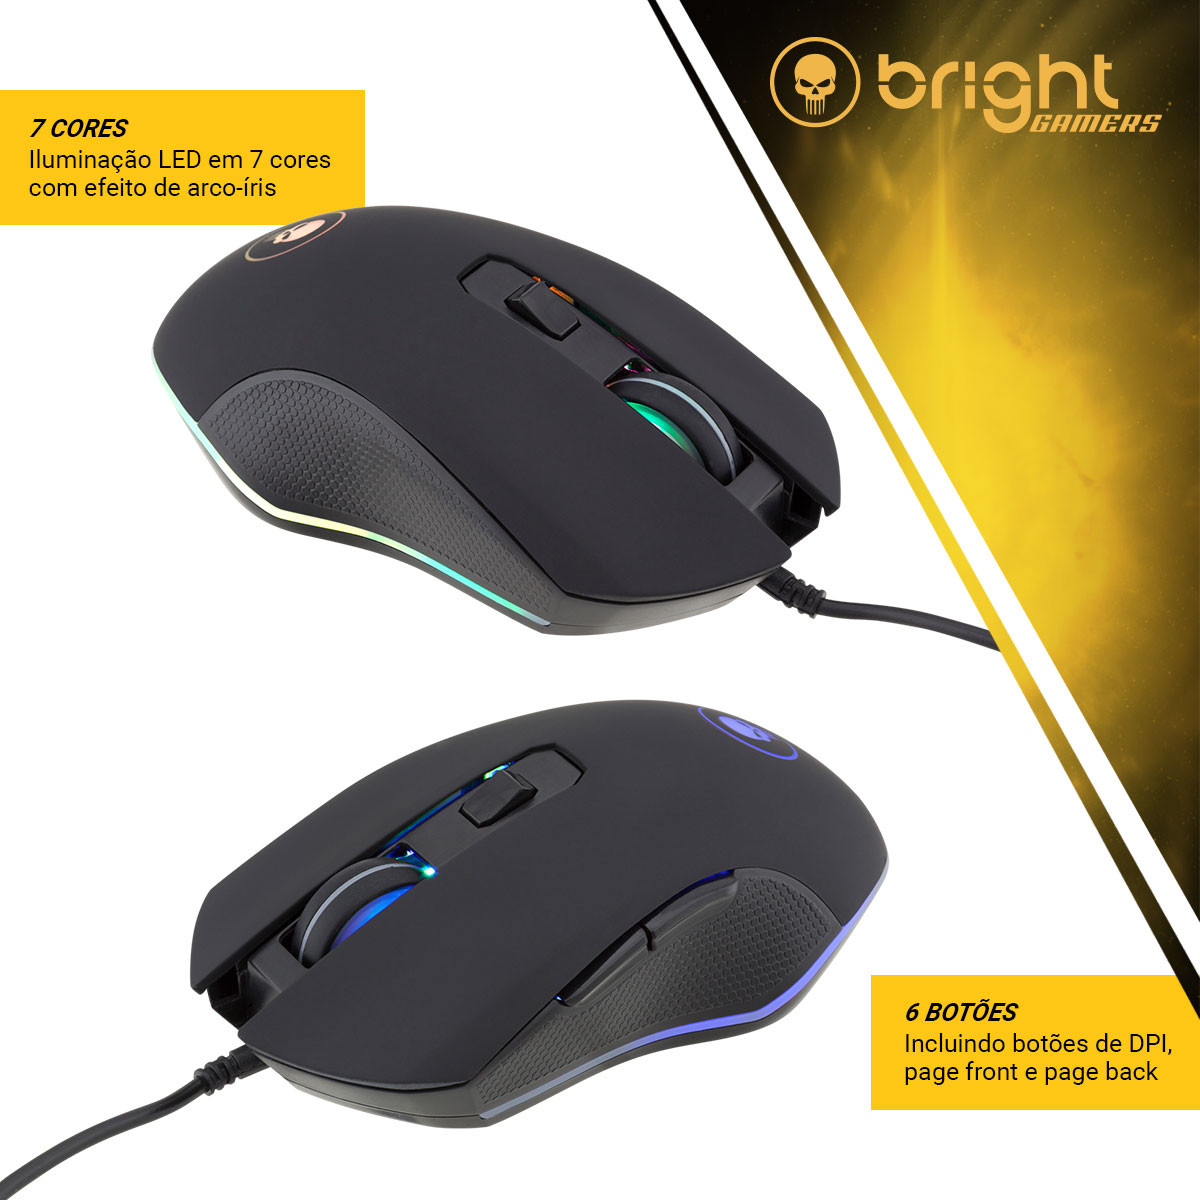 Kit Gamer Teclado e Mouse com Macro 6 Botões com Led e MousePad 542 Bright  - BRIGHT